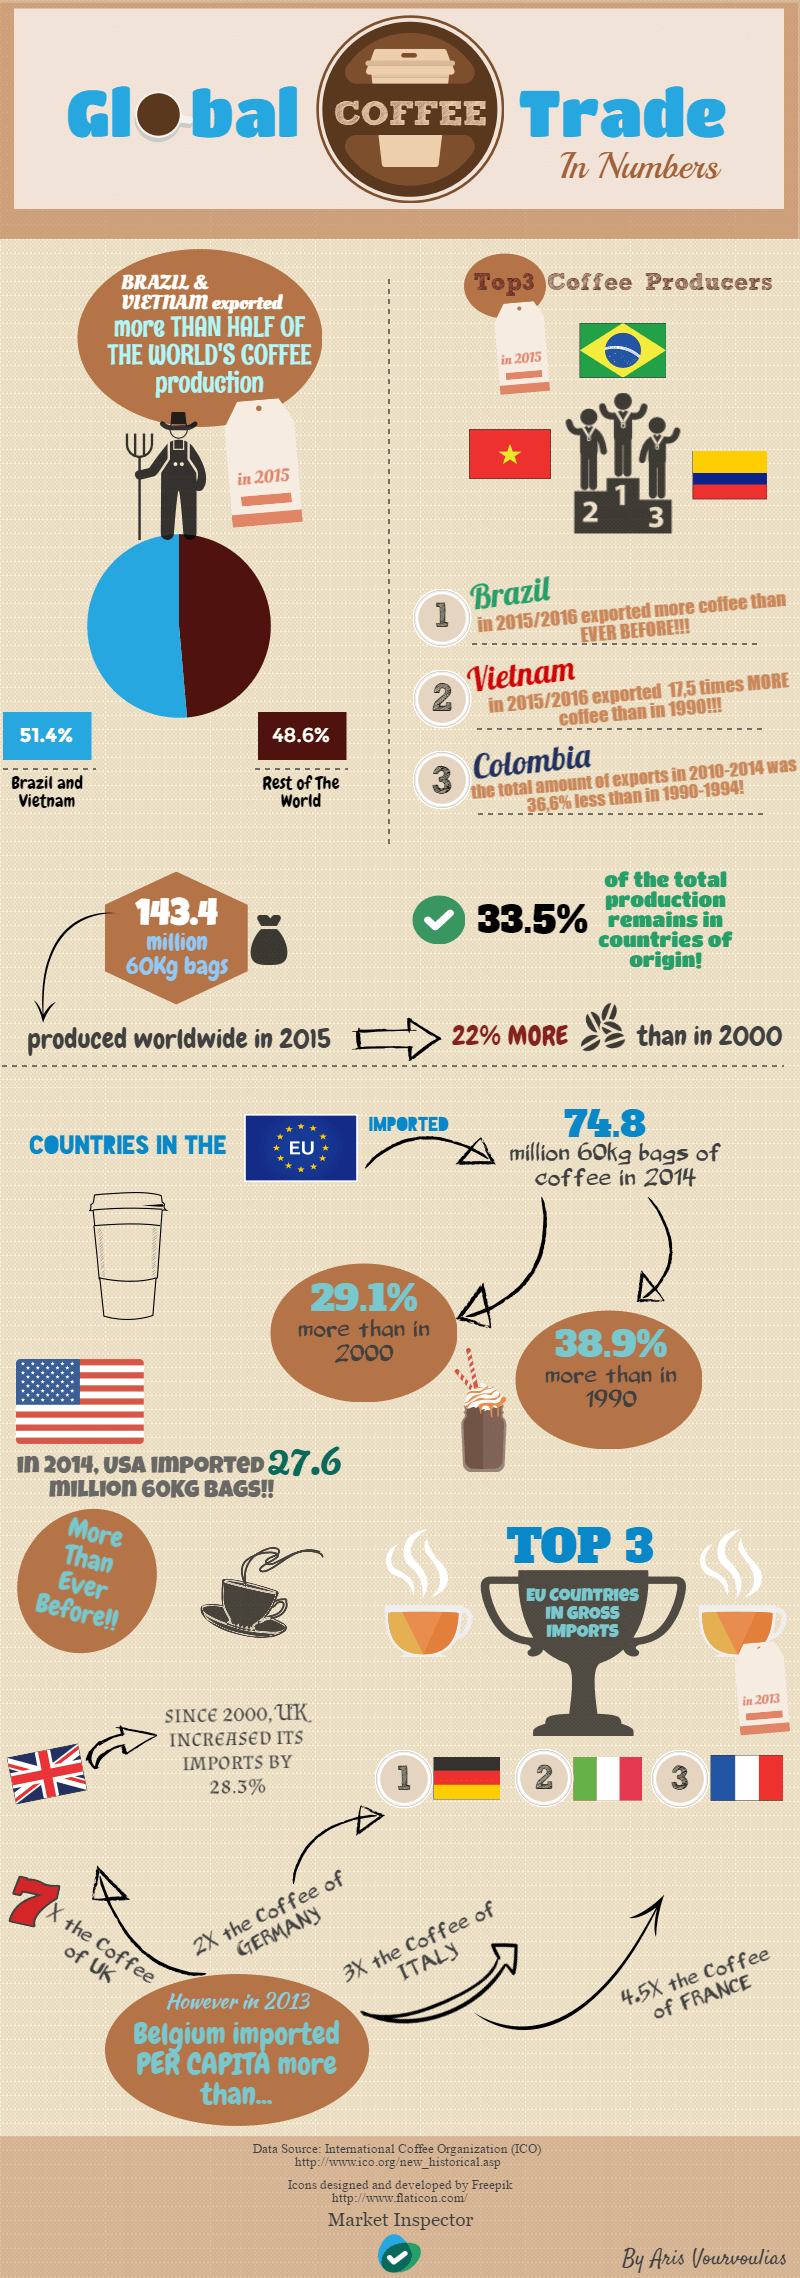 Infographic Global Coffee Trade